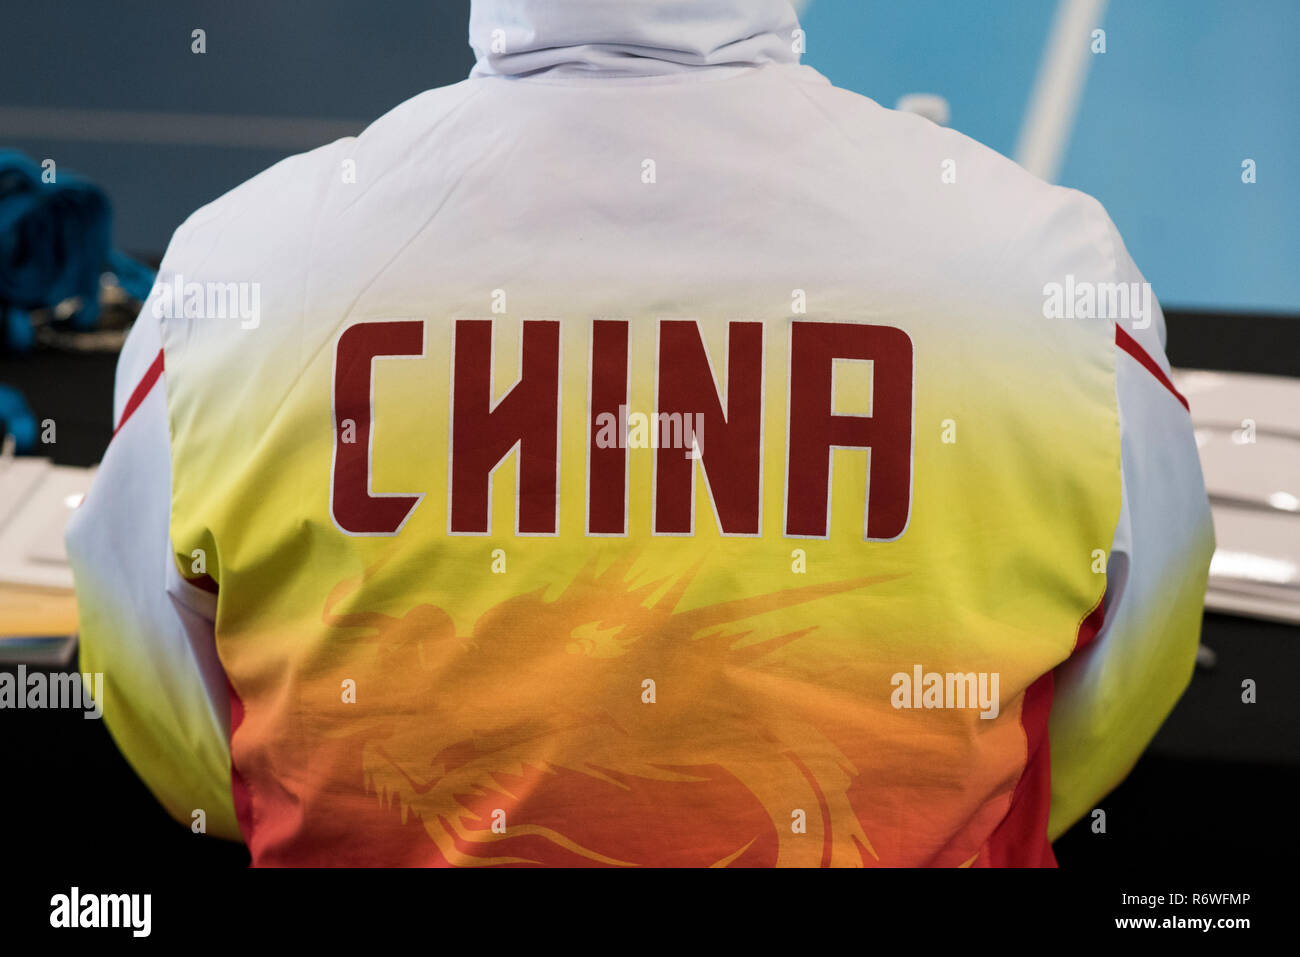 Team China Jacket for Athletics event Stock Photo